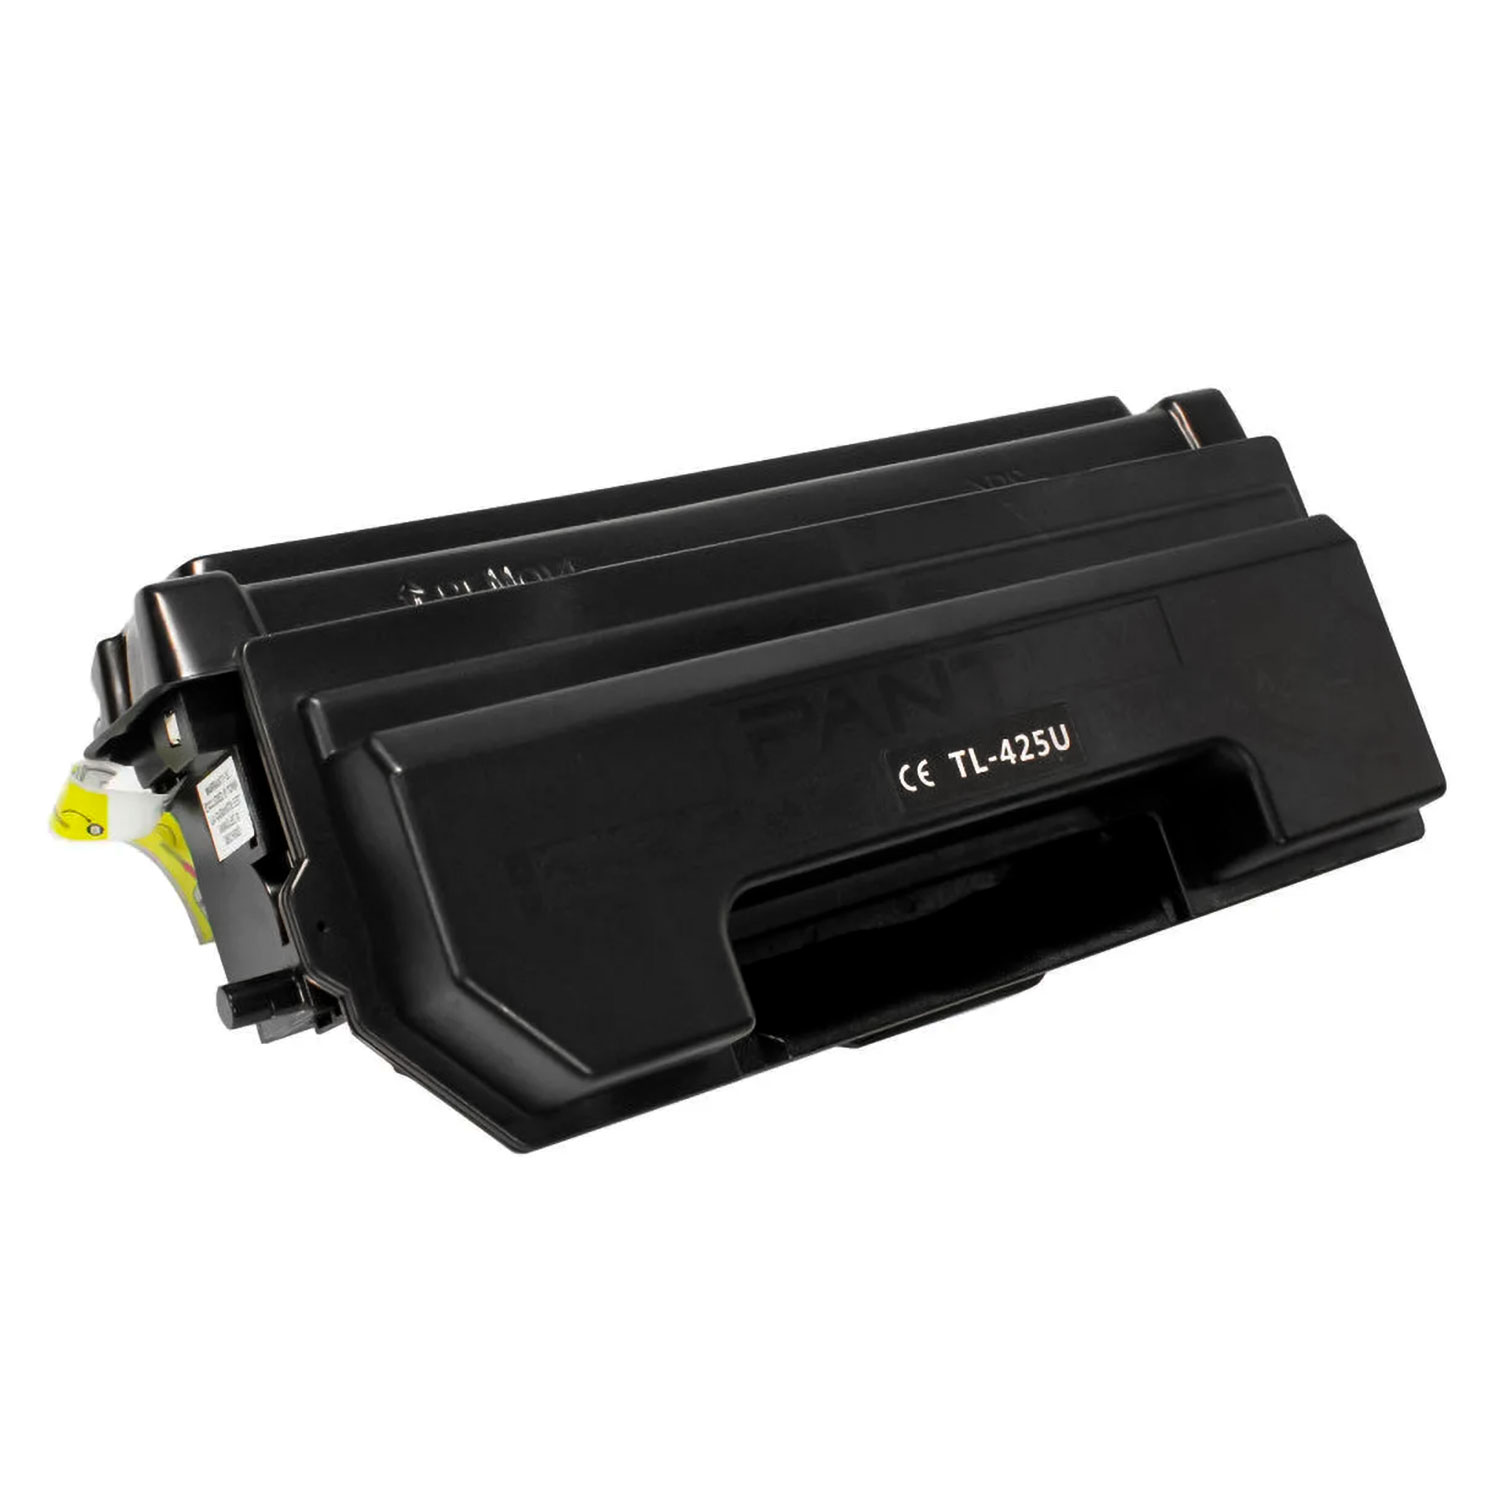 Toner Pantum TL-425U para Impressora Pantum P3305/M7105 - Preto